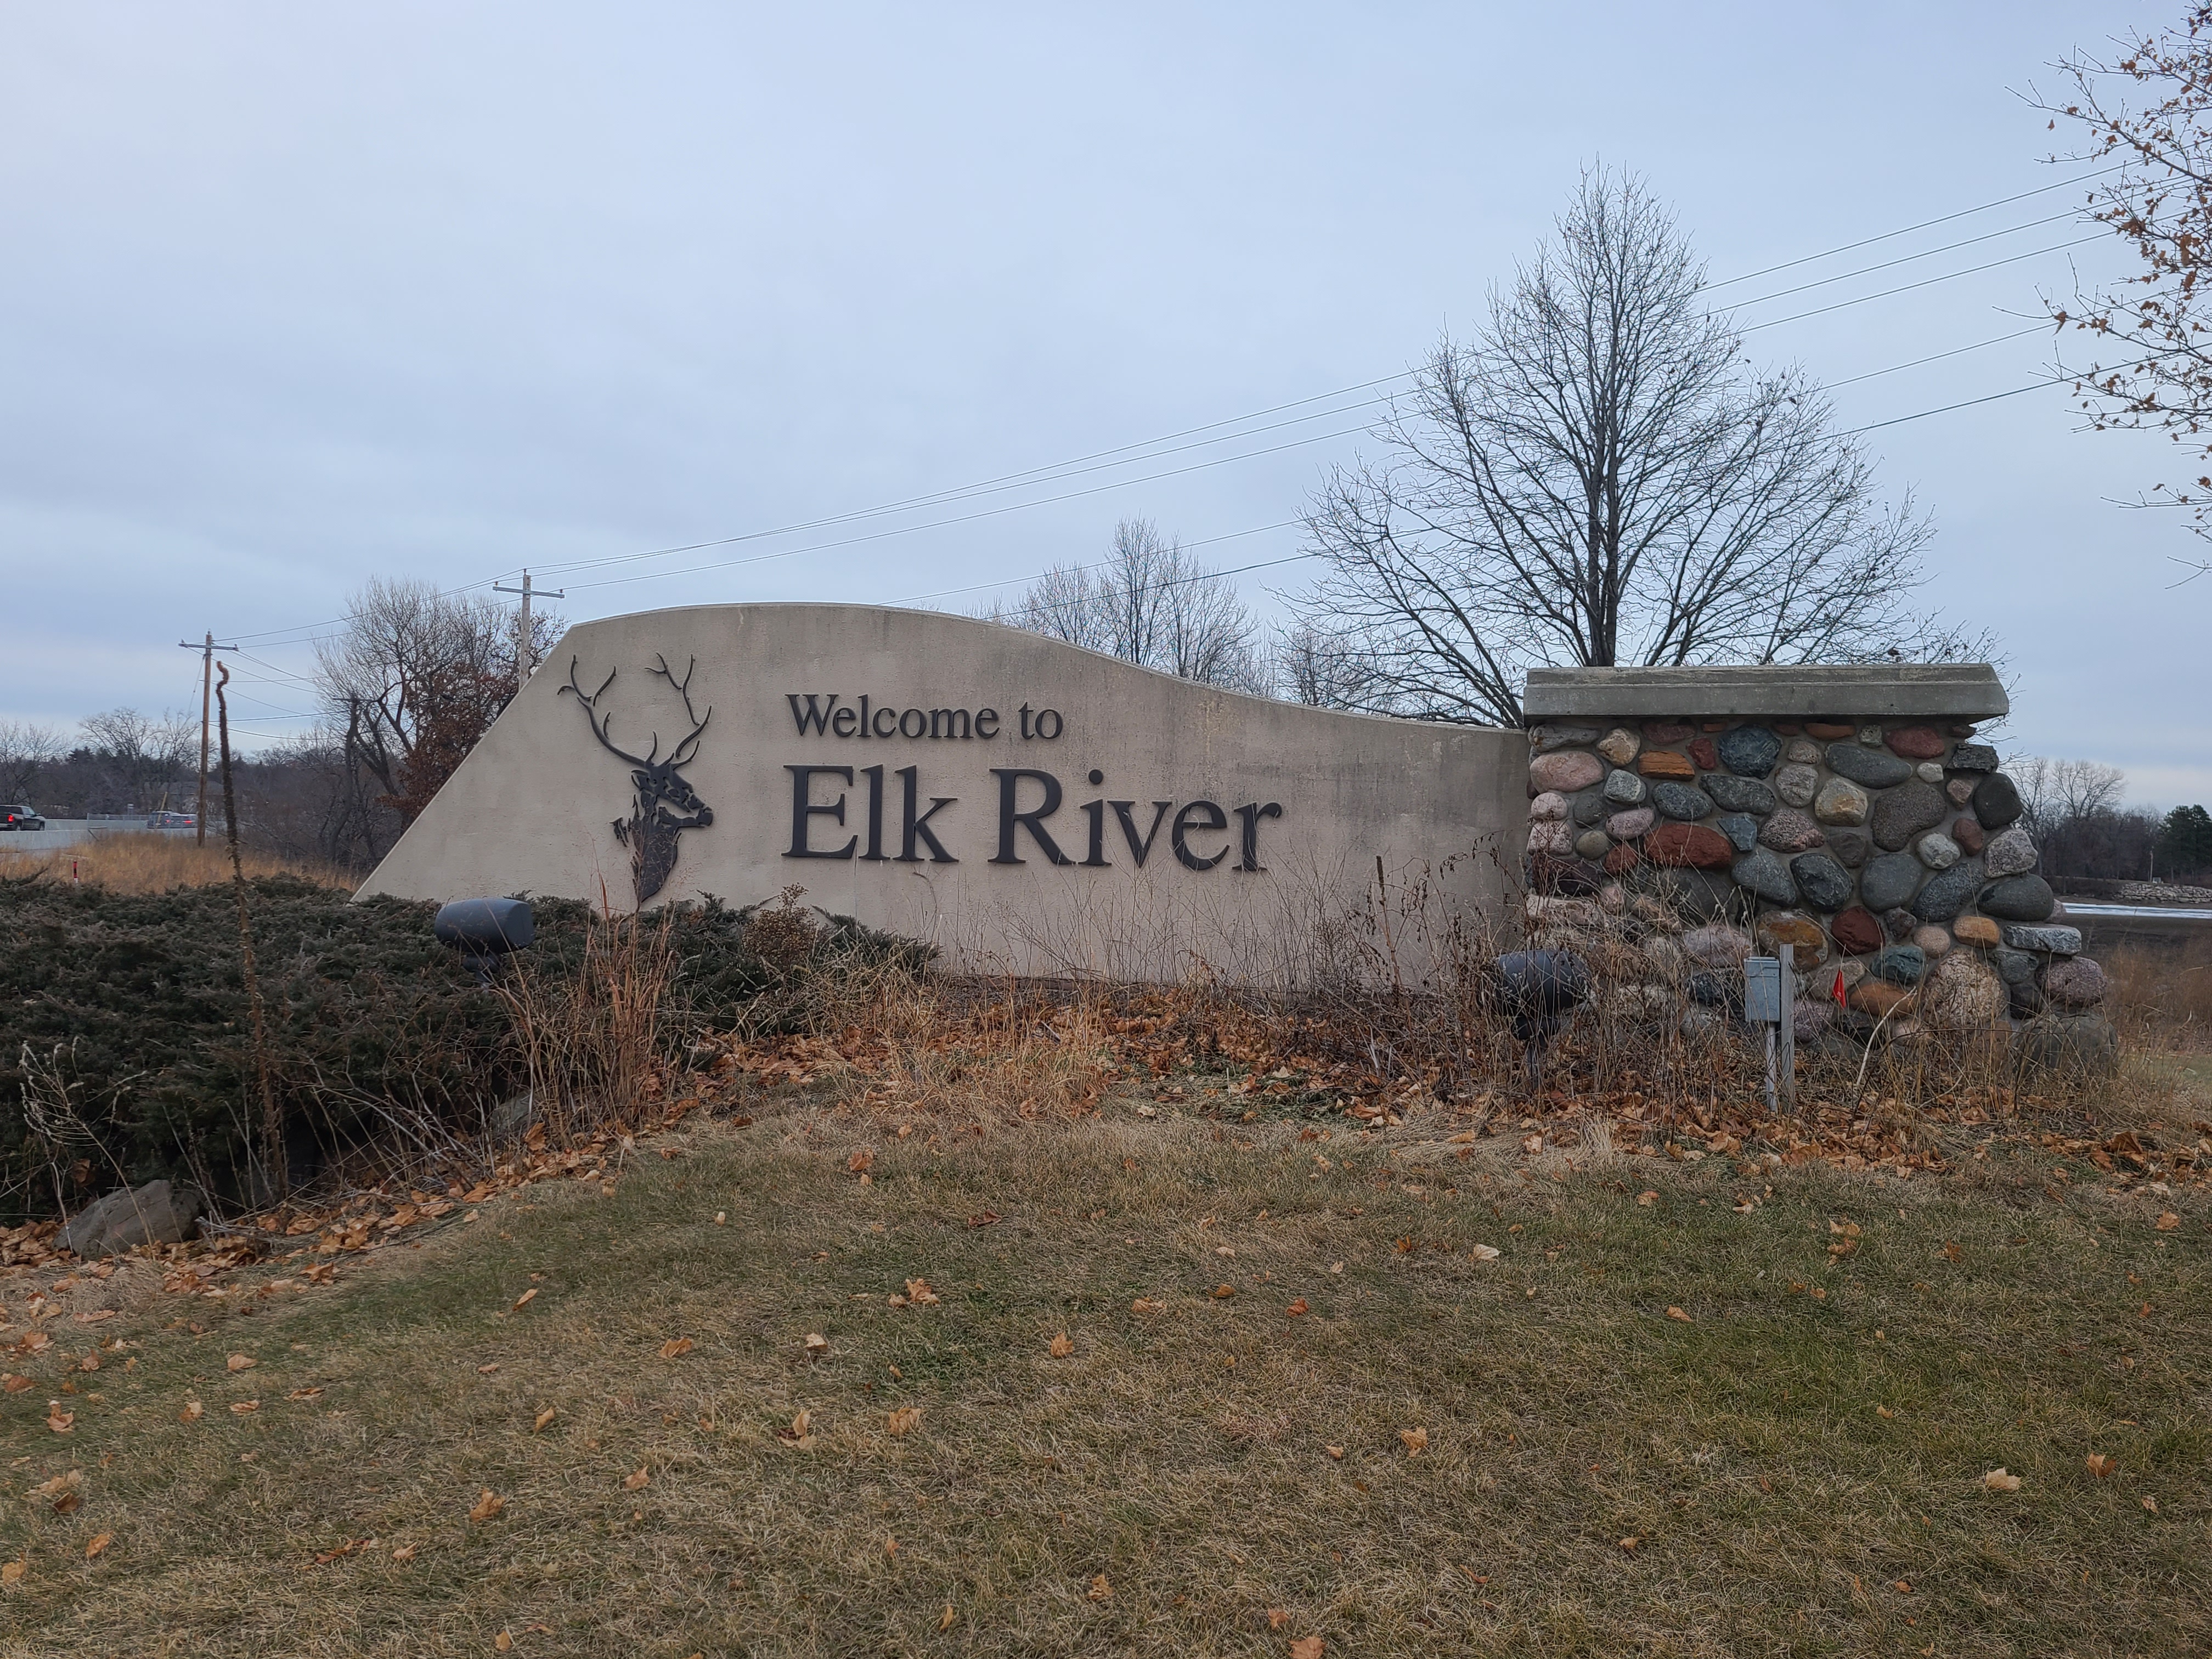 Highway 169 and 10 work in Elk River